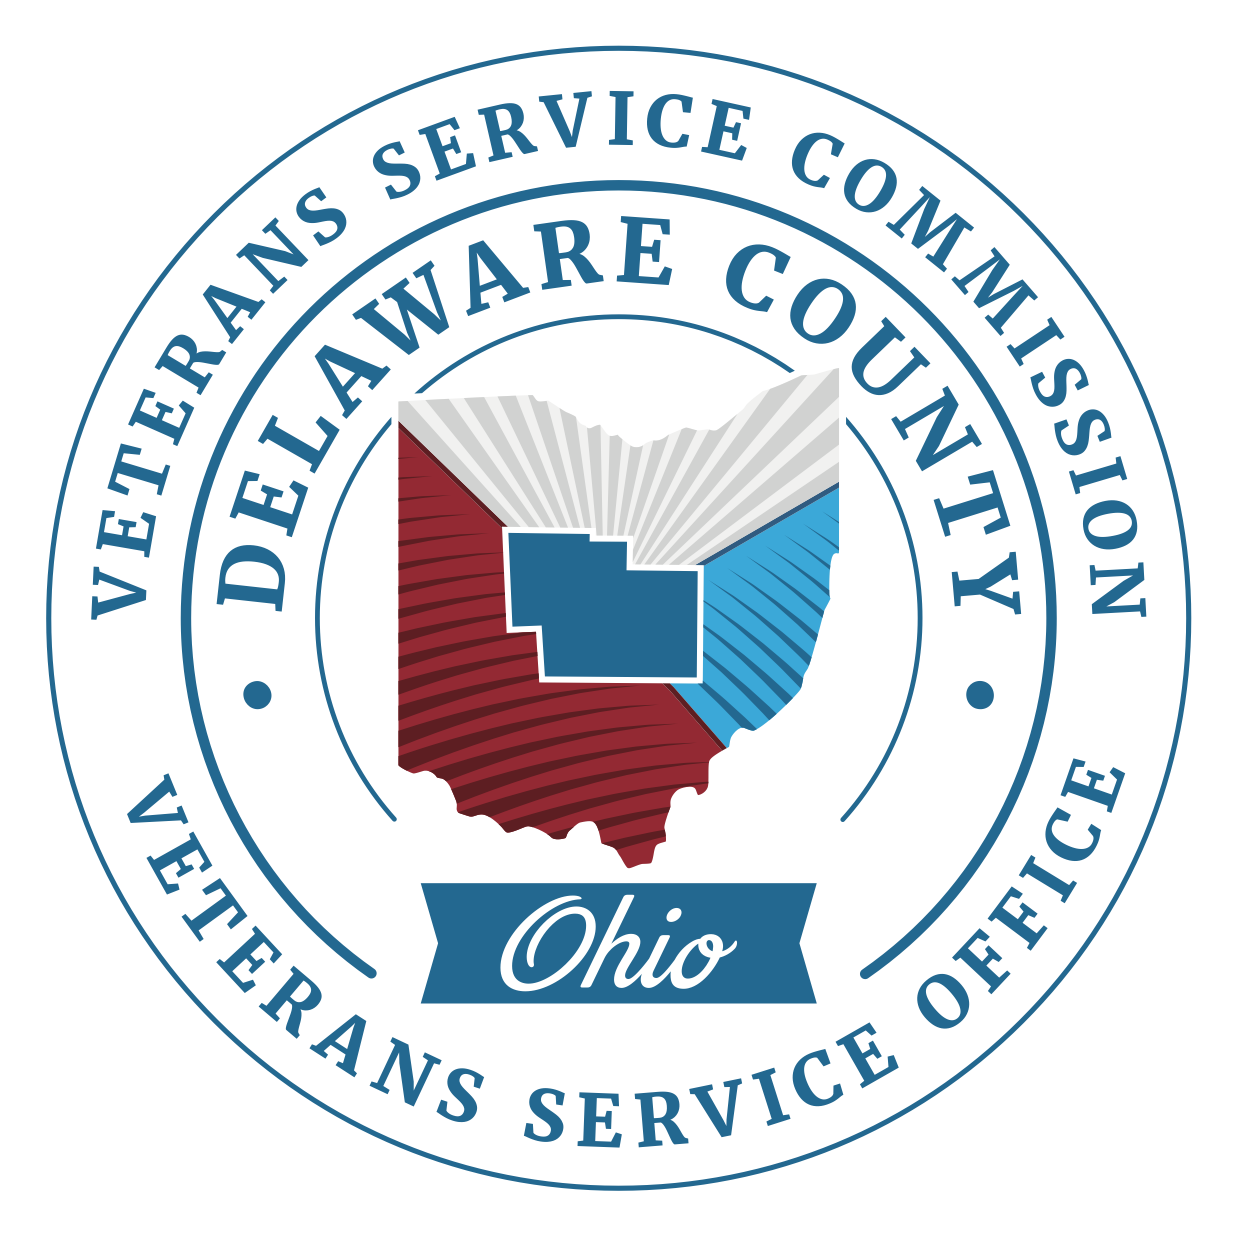 Delaware County Veterans Service Commission